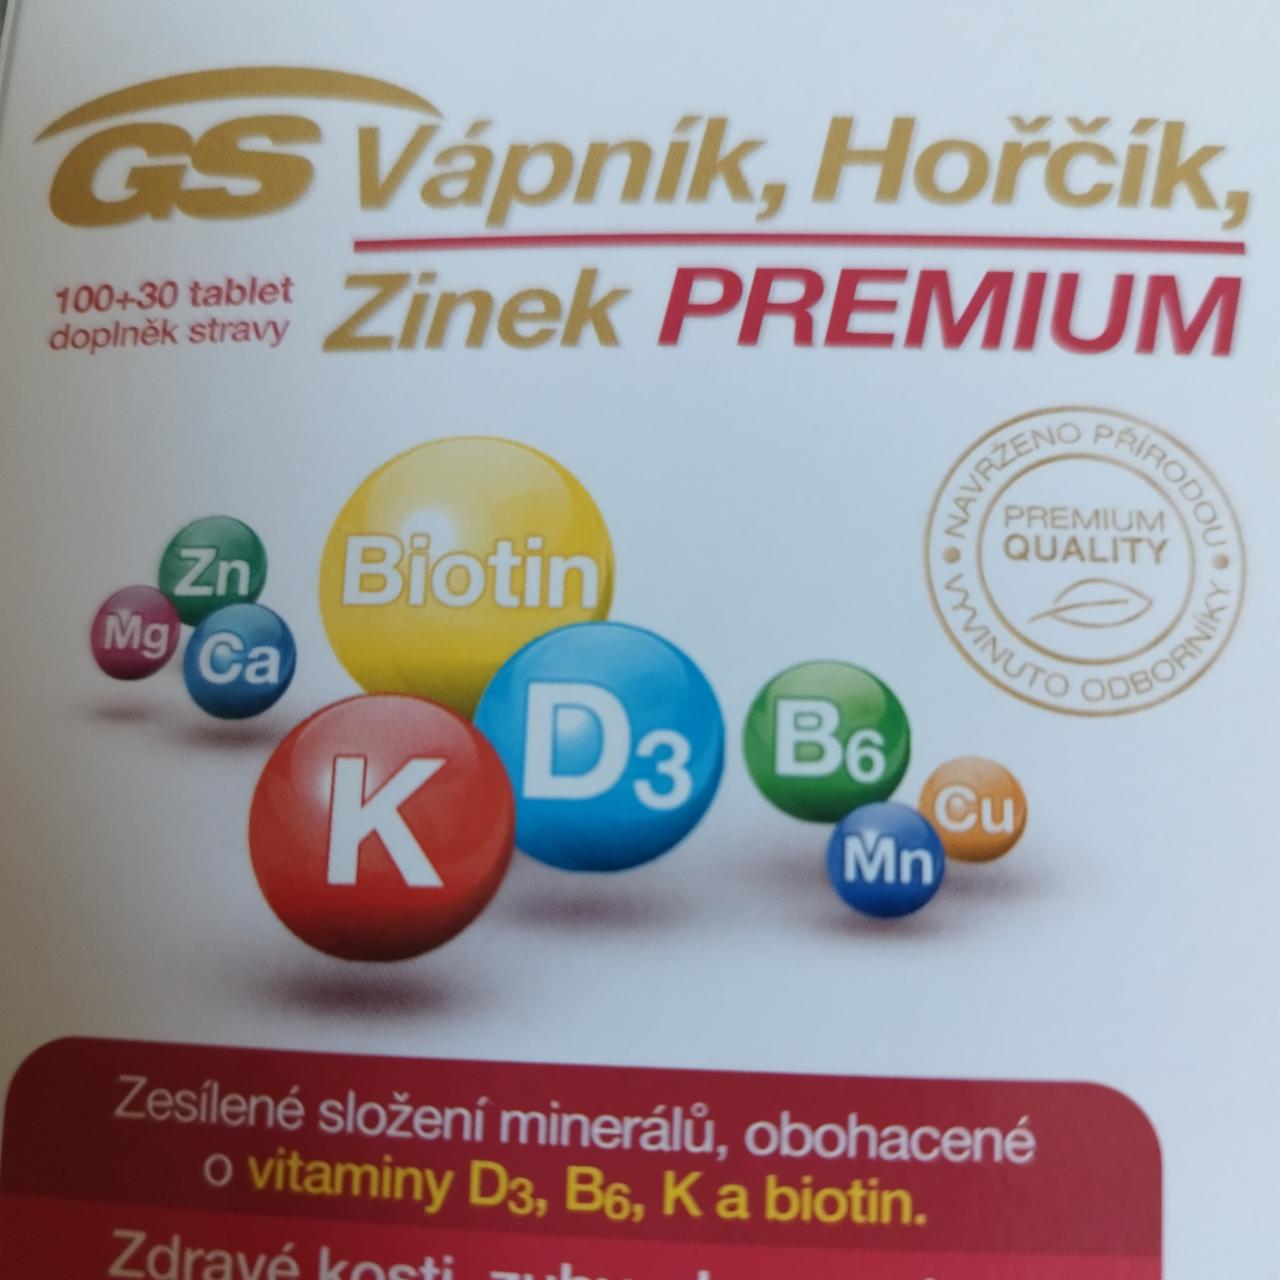 Fotografie - Vápnik, Hořčík, Zinek Premium GS